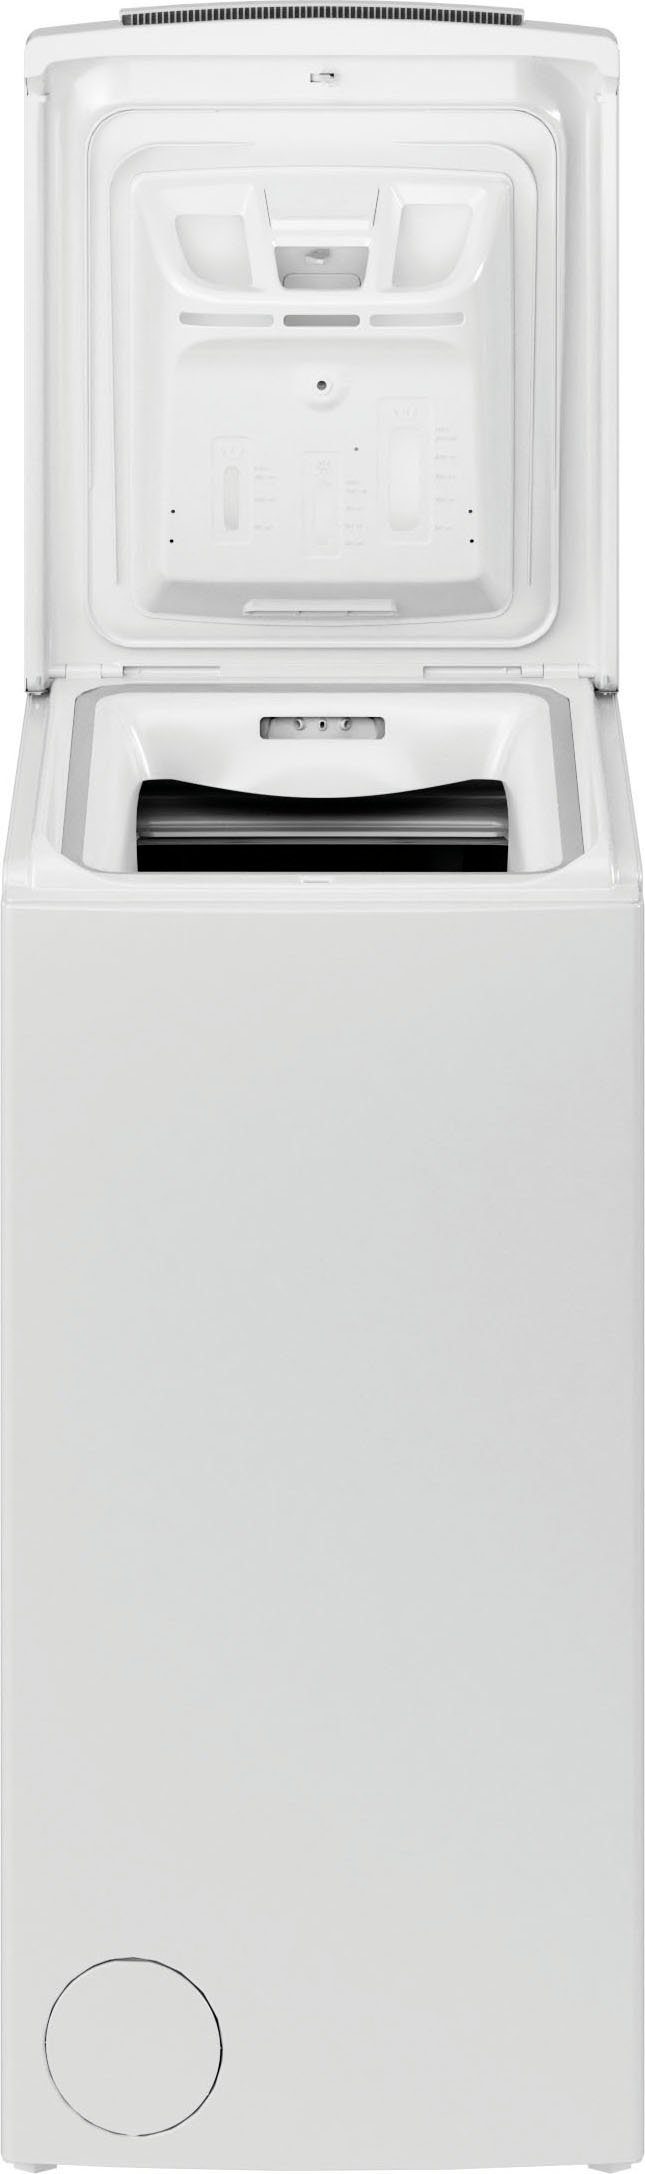 kg, Eco 12C, 1200 Waschmaschine BAUKNECHT 6 U/min Toplader Smart WAT